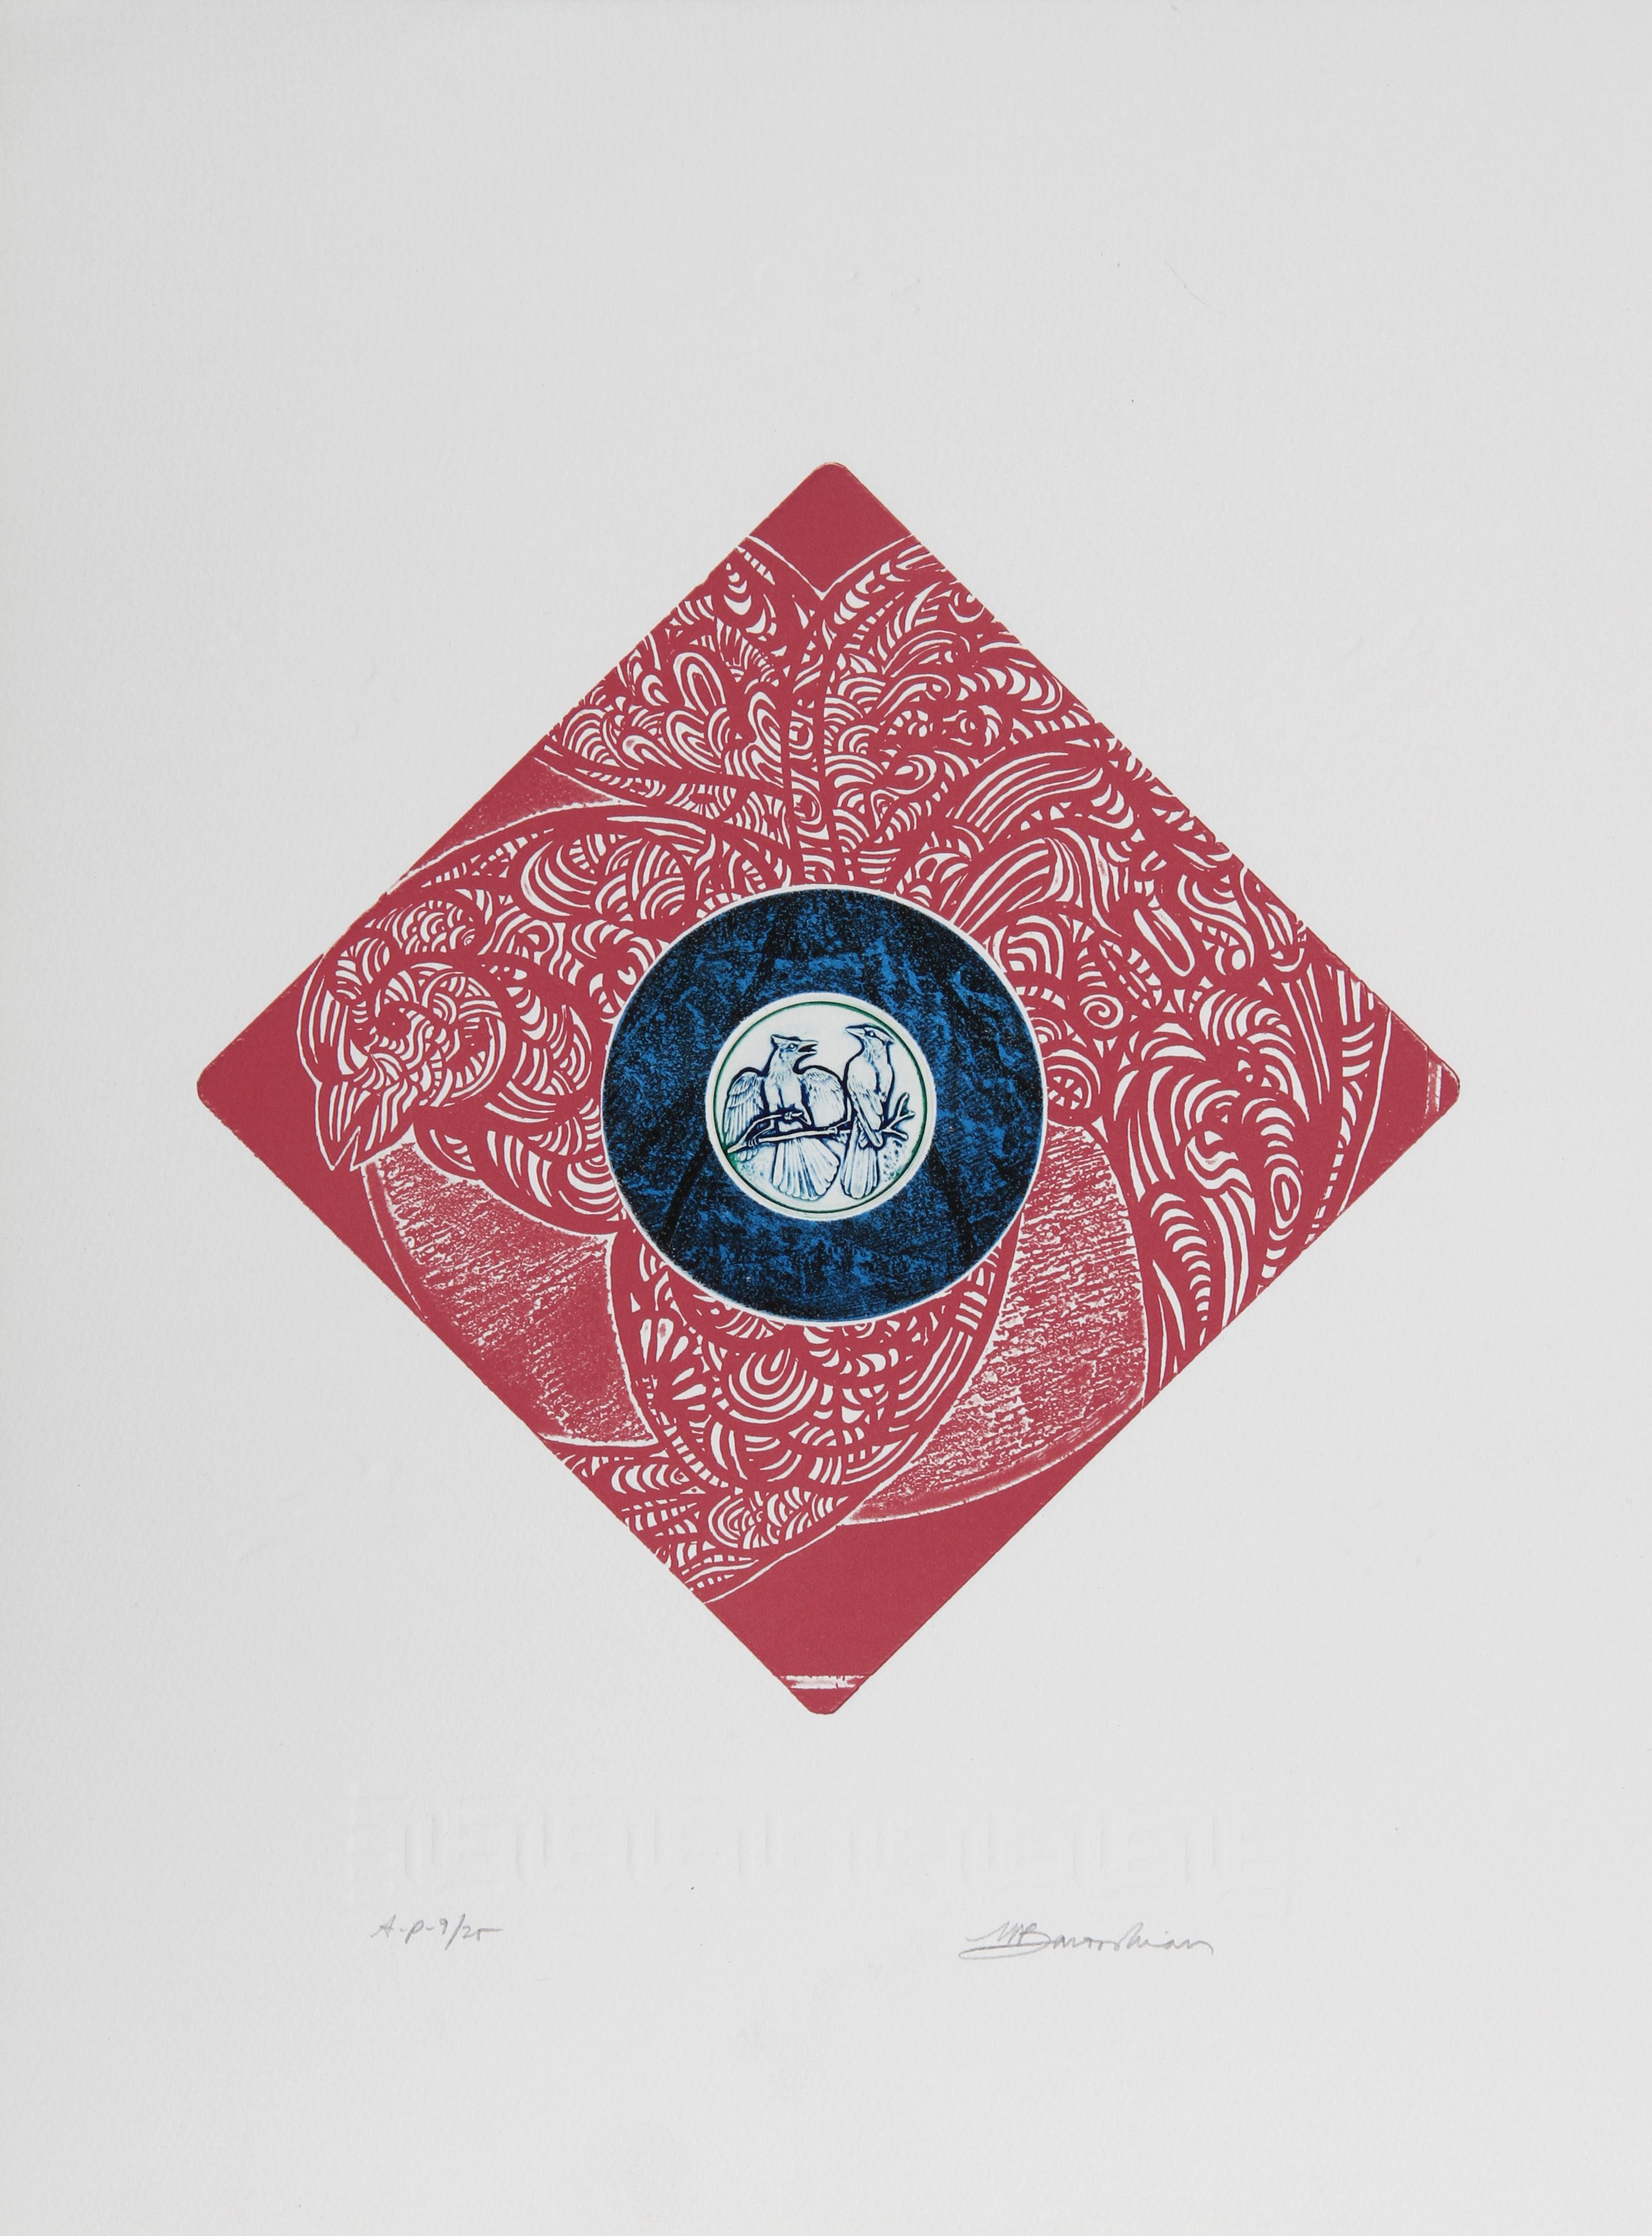 Blue Jays, Aquatint Etching by Martin Barooshian